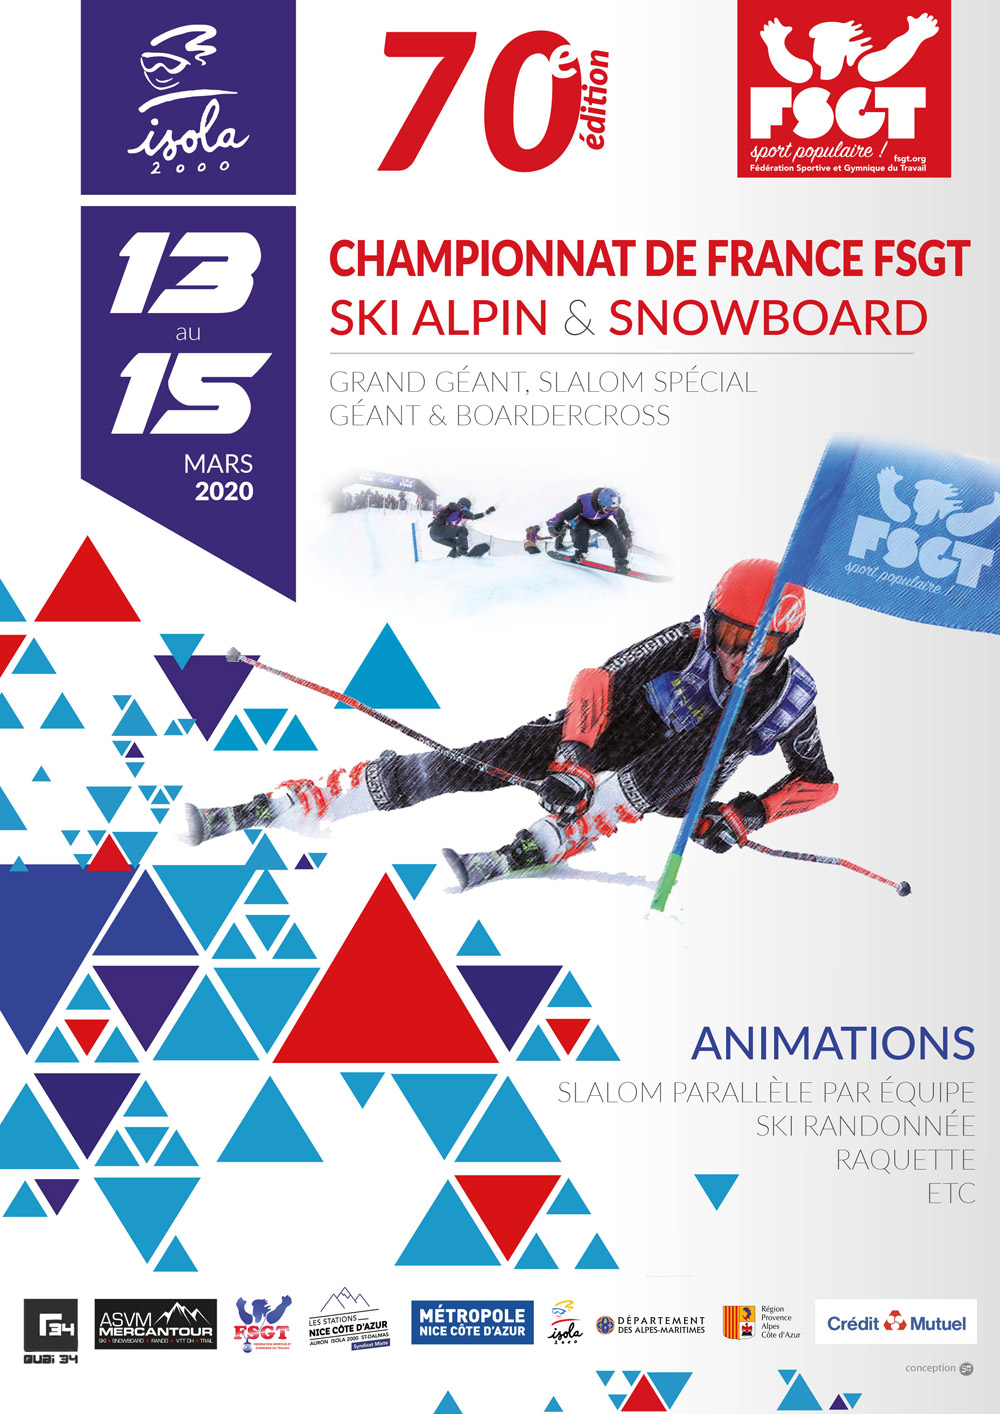 Isola 2000 - Championnat de France FSGT de Ski & Snowboard 2020